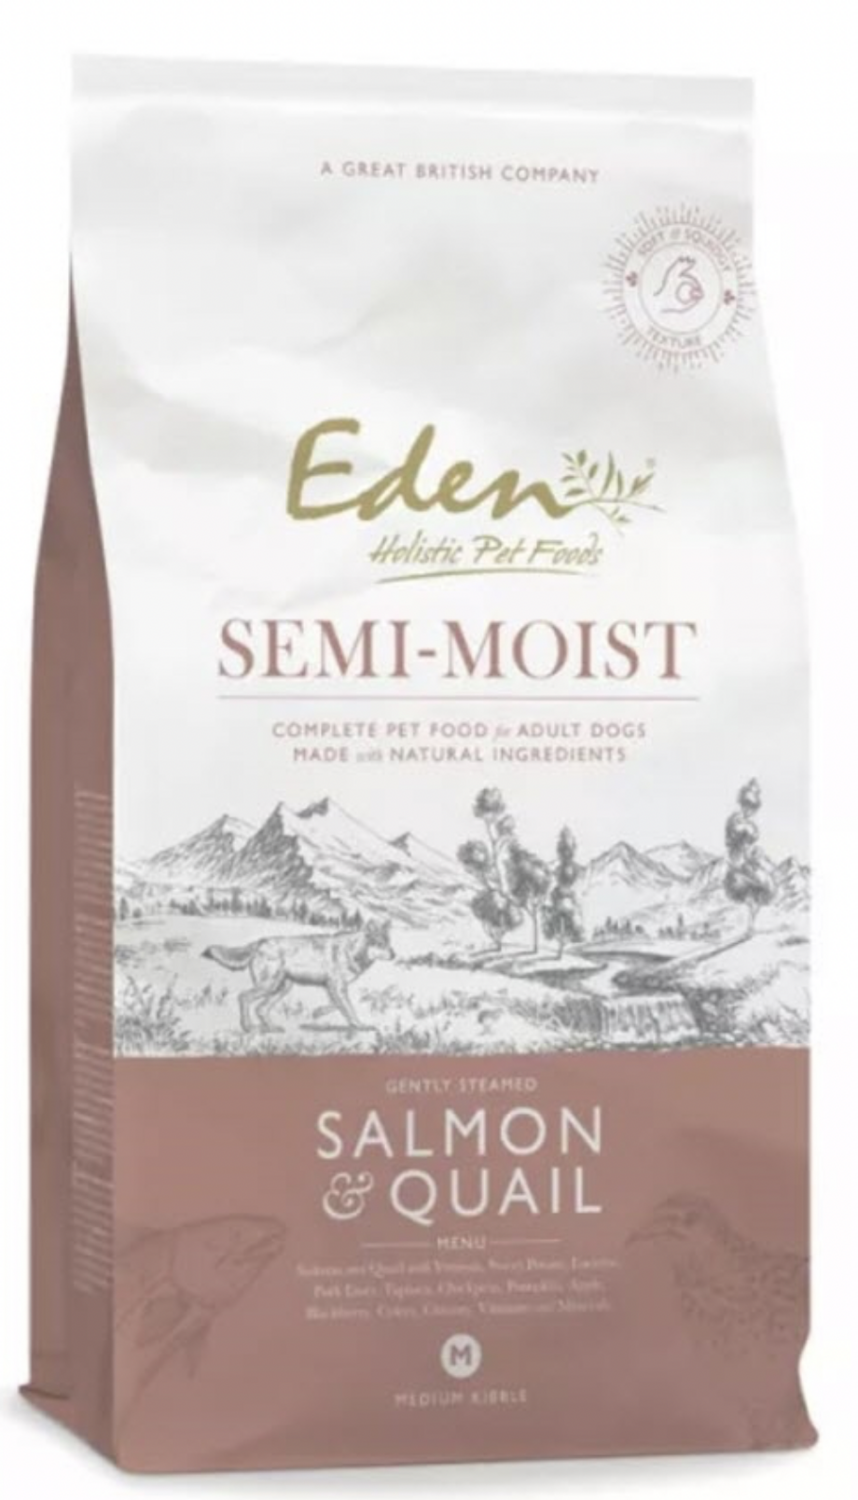 Eden wild salmon & quail - semi moist